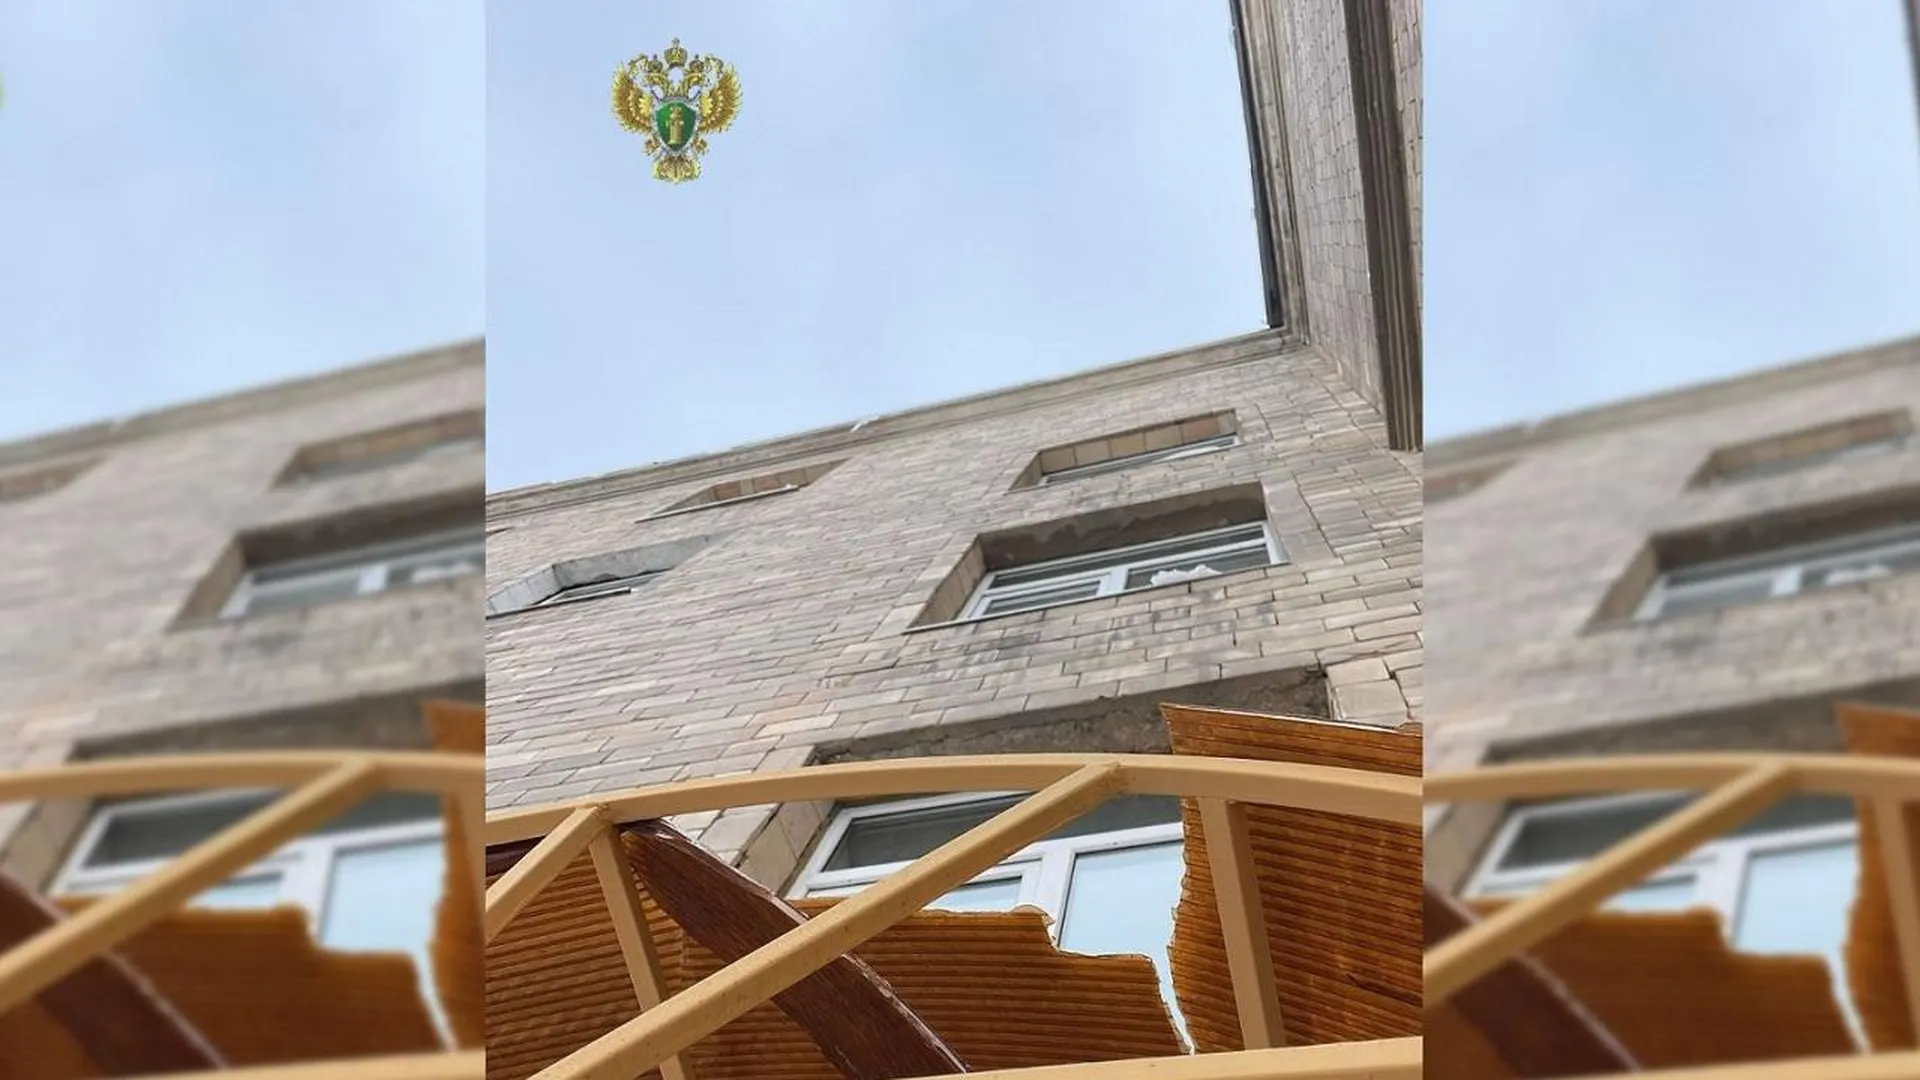 Мужчина погиб в результате падения наледи с крыши дома в Щелково